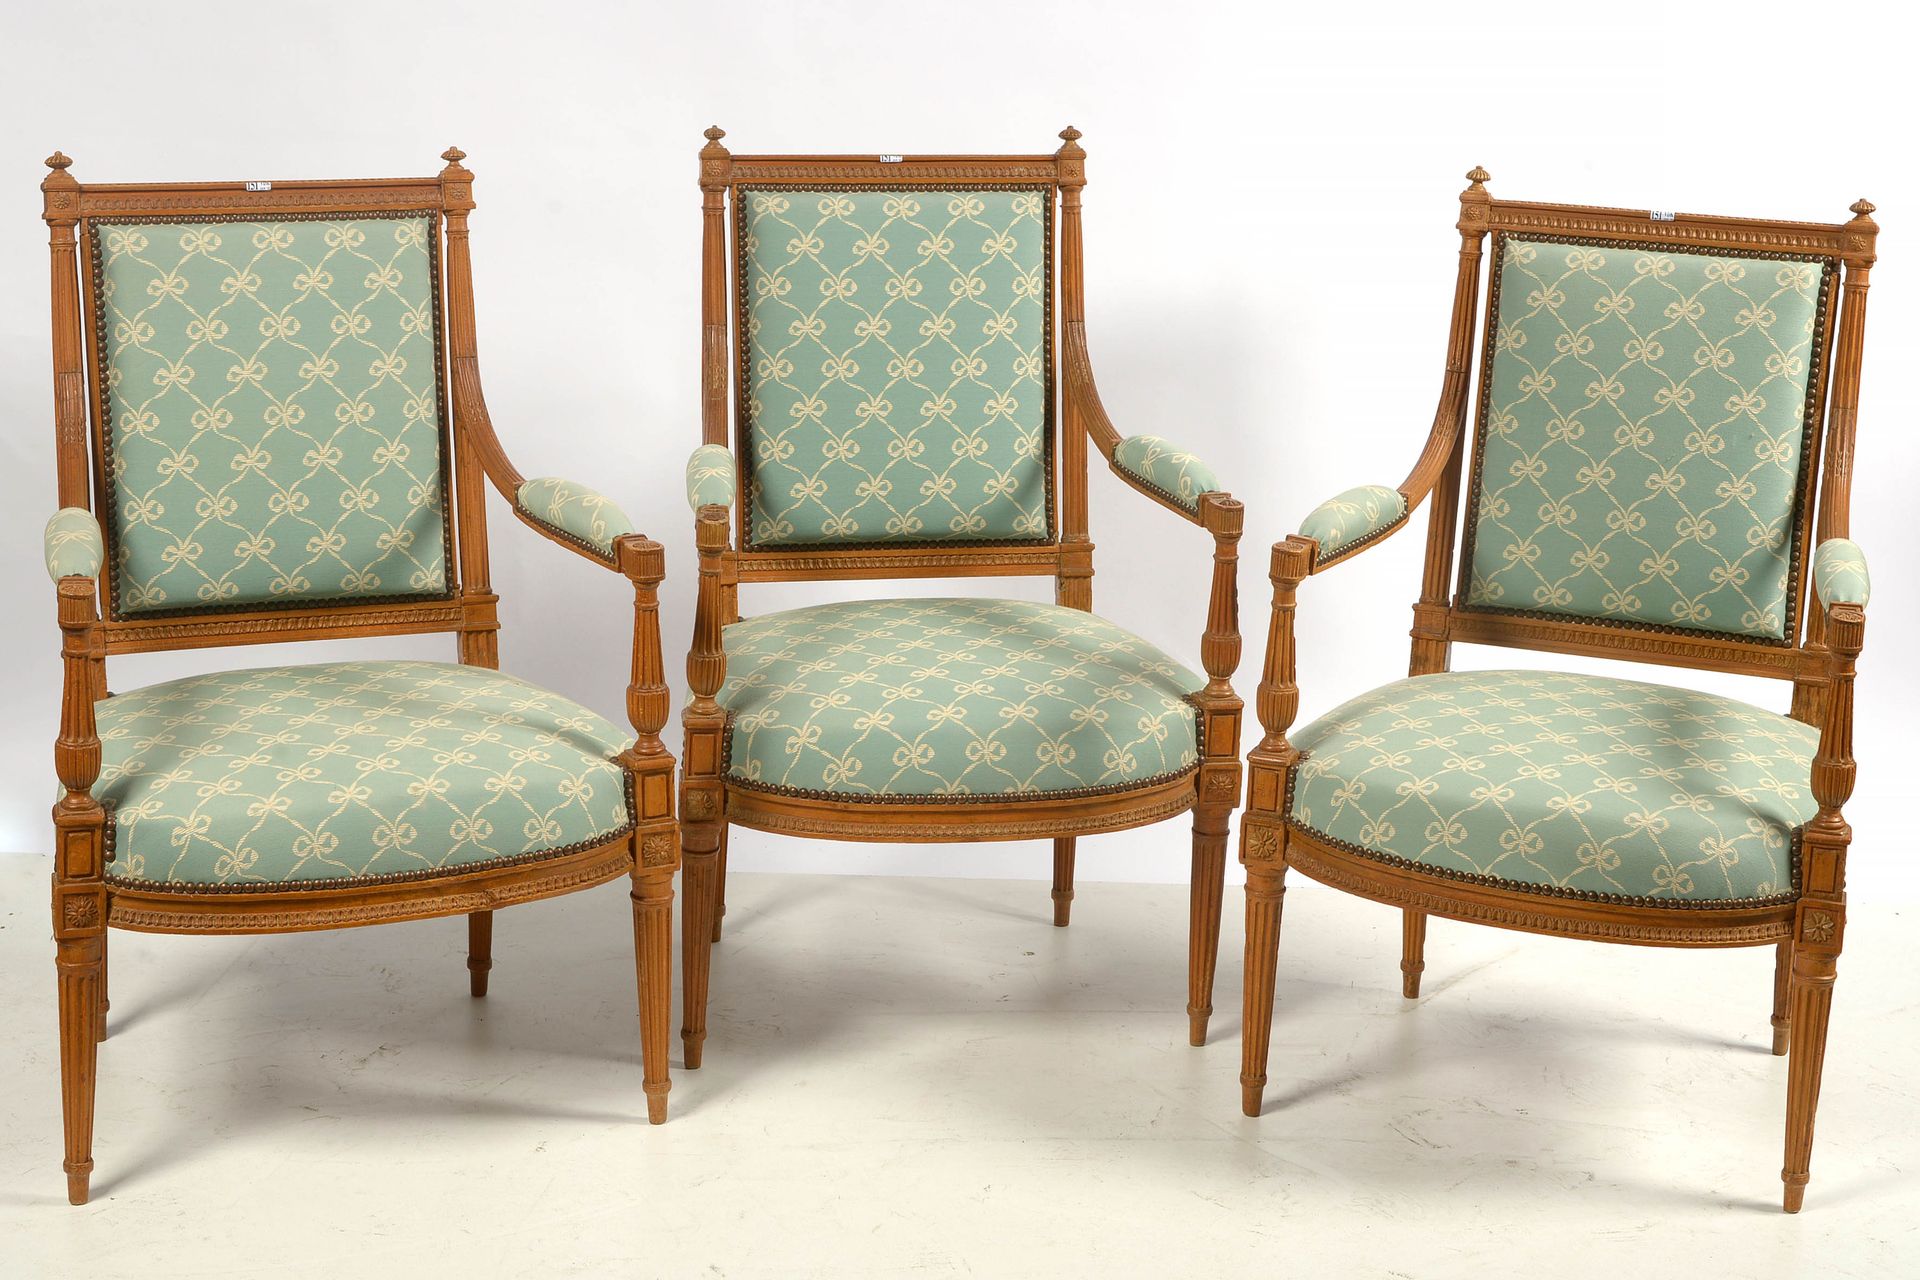 Null 路易十六时期的三套扶手椅，名为 "A la Reine"，采用天然雕刻的山毛榉木，用绿松石织物装饰，上面有 "Nœuds"。年代：18世纪。